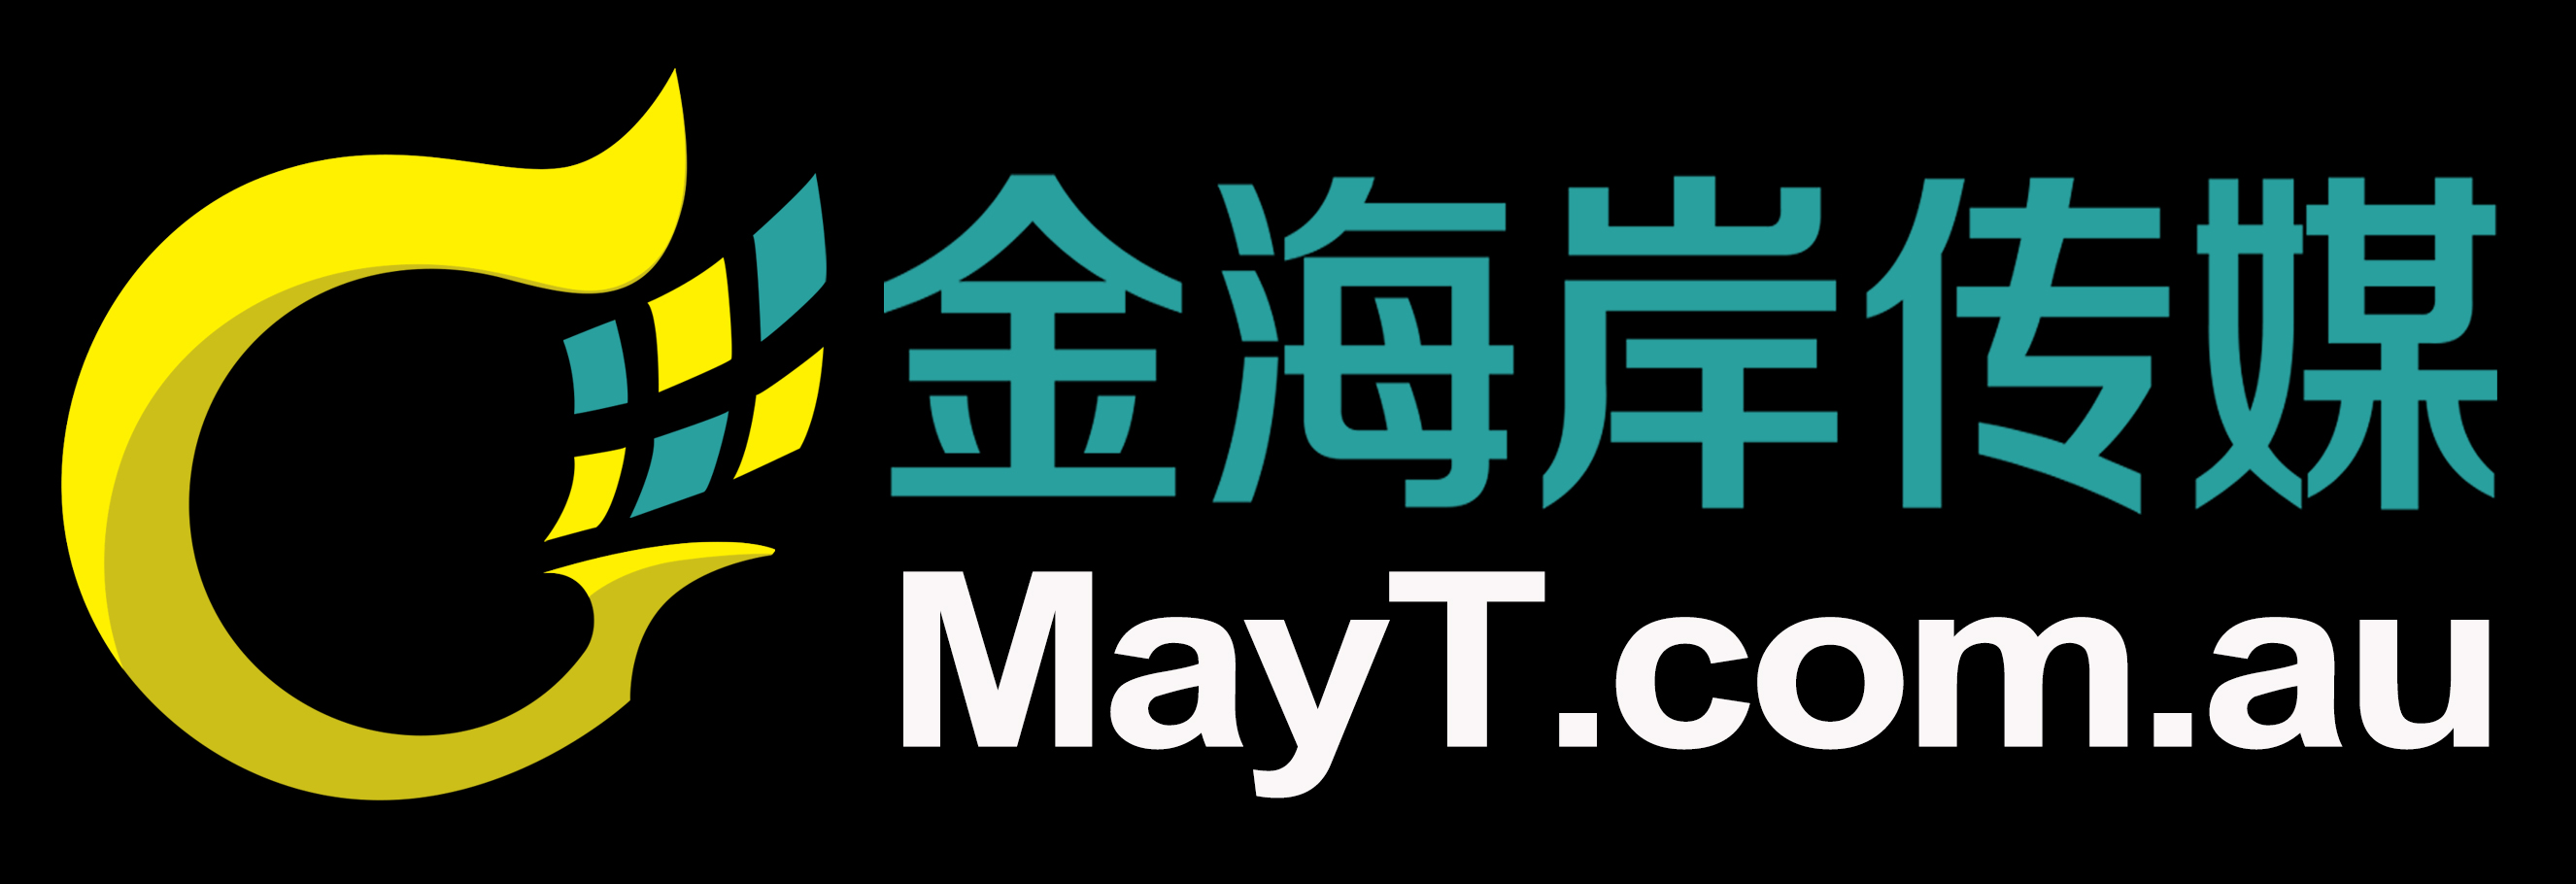 MayTmedia Logo 阿里巴巴CEO率众多高层、大咖, 张大奕等千万级粉丝大网红, 要来澳洲搞事情了！